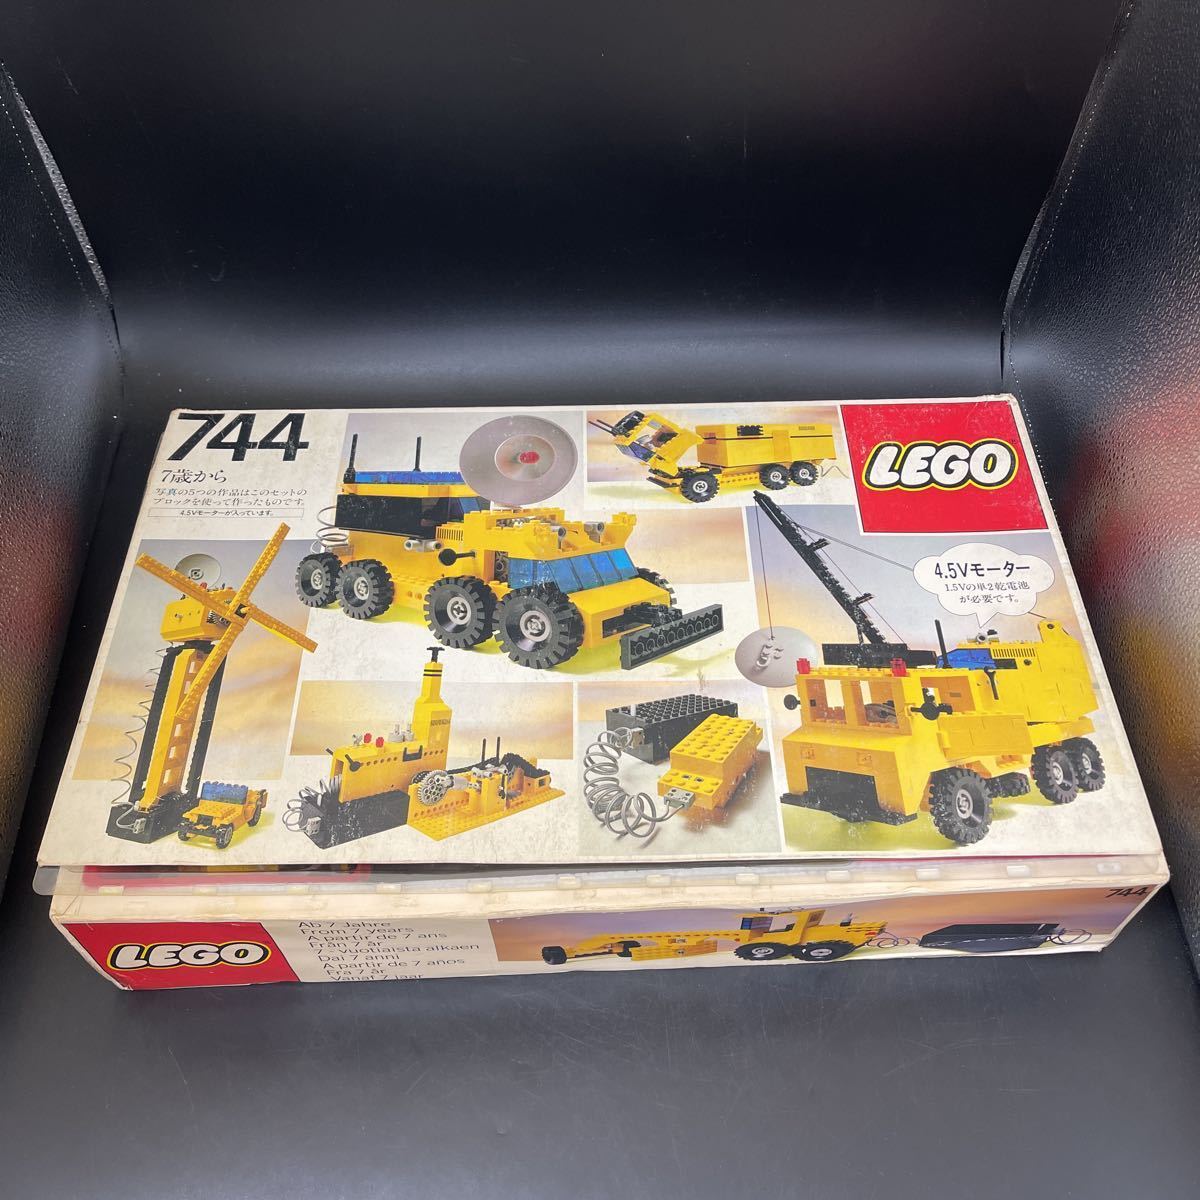 Yahoo!オークション -「80年代」(LEGO) (ブロック、積木)の落札相場